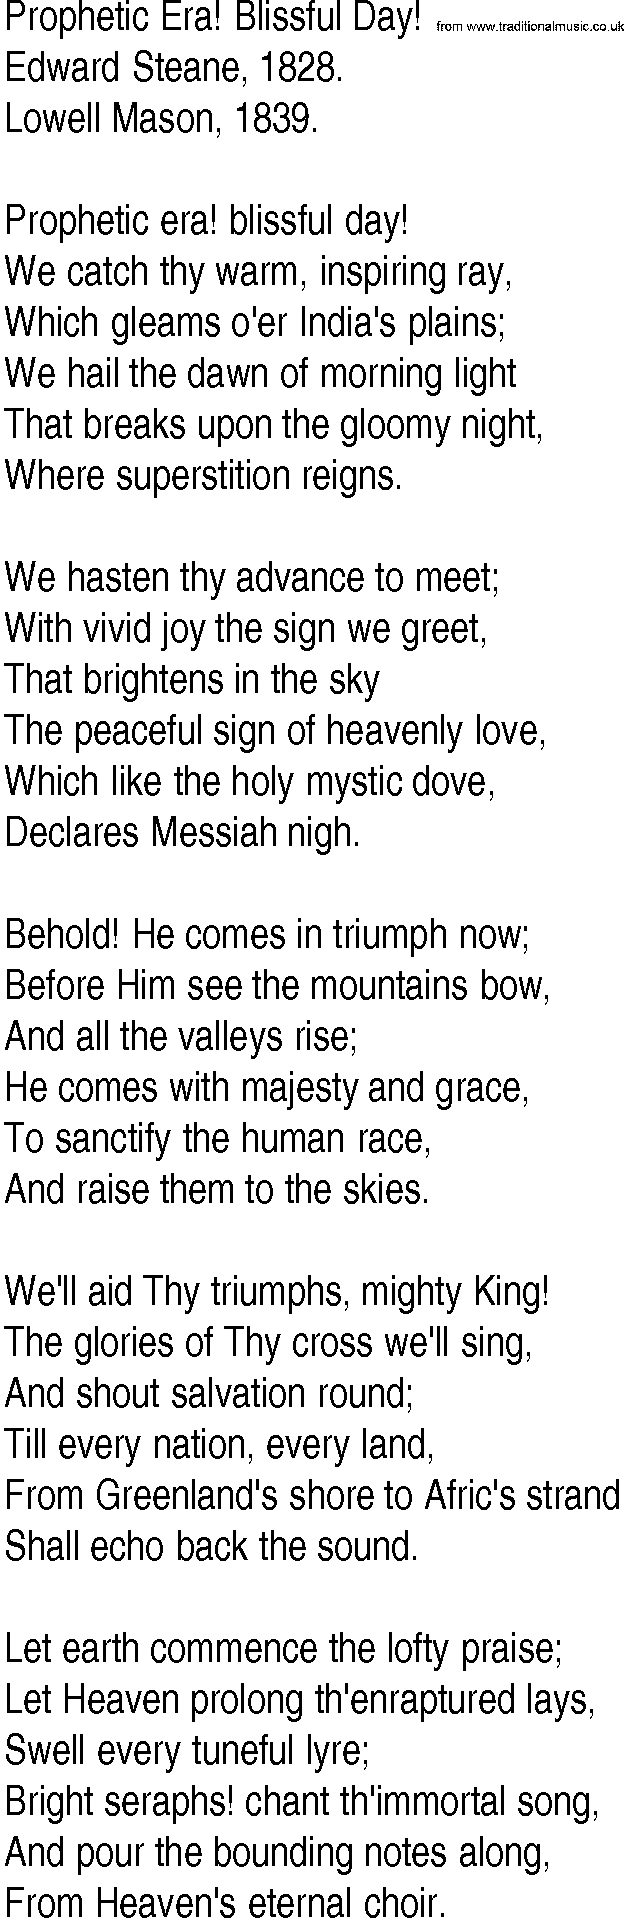 Hymn and Gospel Song: Prophetic Era! Blissful Day! by Edward Steane lyrics